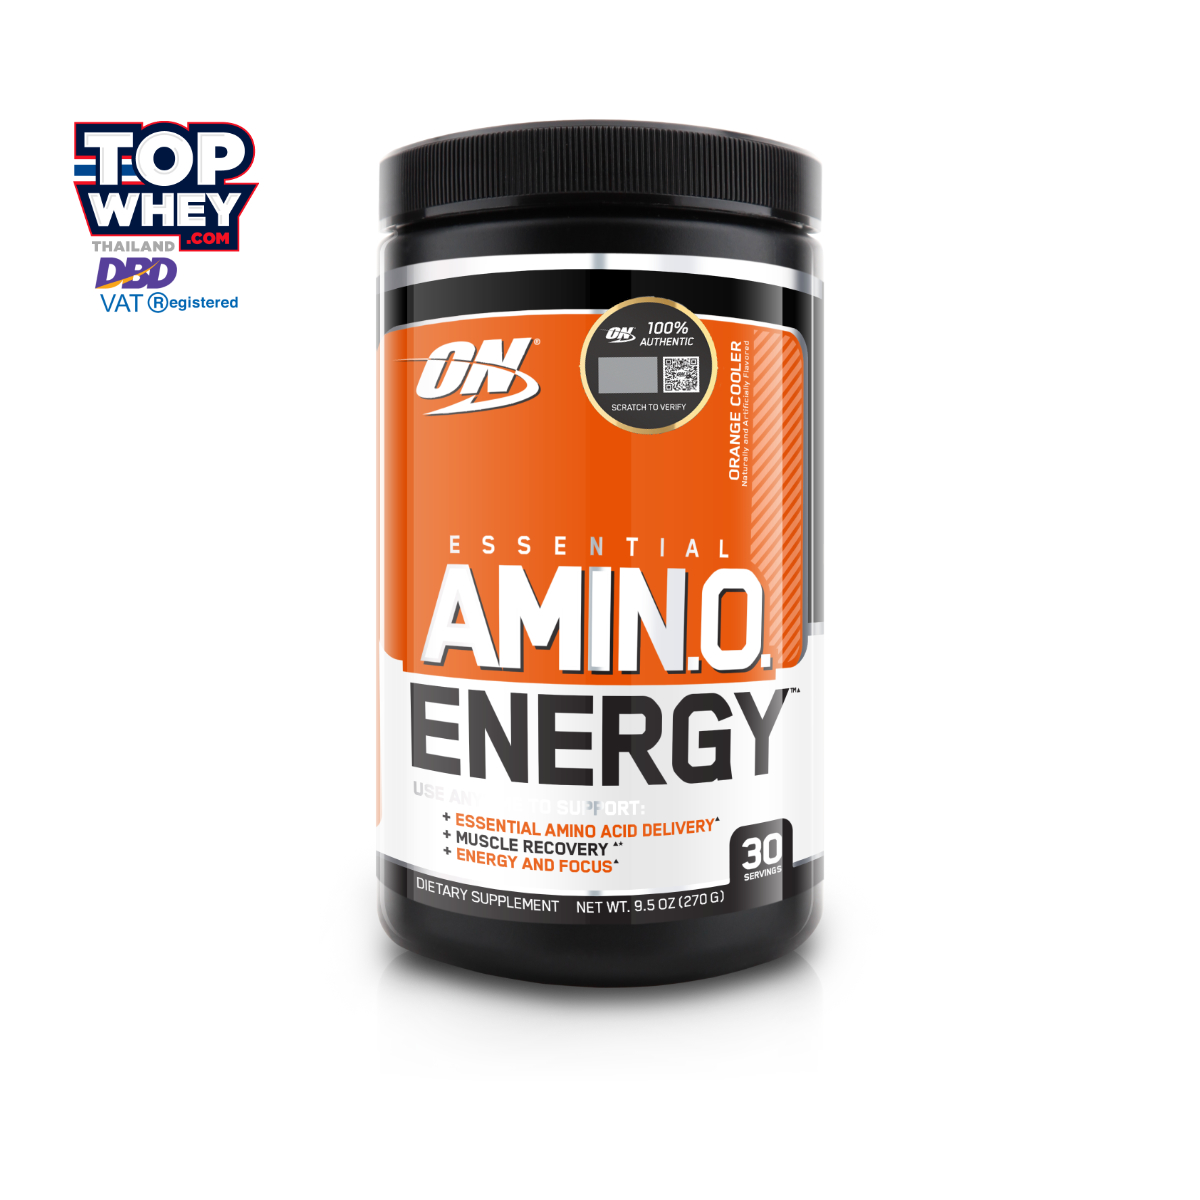 Optimum Nutrition Amino Energy 30 Servings - Orange Cooler – กรดอะมิโนชนิดผง สารสกัดจากชาเขียวและเมล็ดกาแฟและมีกรดอะมิโนมากกว่า 11 ชนิด ช่วยให้ร่างกายตื่นตัวสดชื่น  กล้ามเนื้อฟื้นตัวได้ไวขึ้น